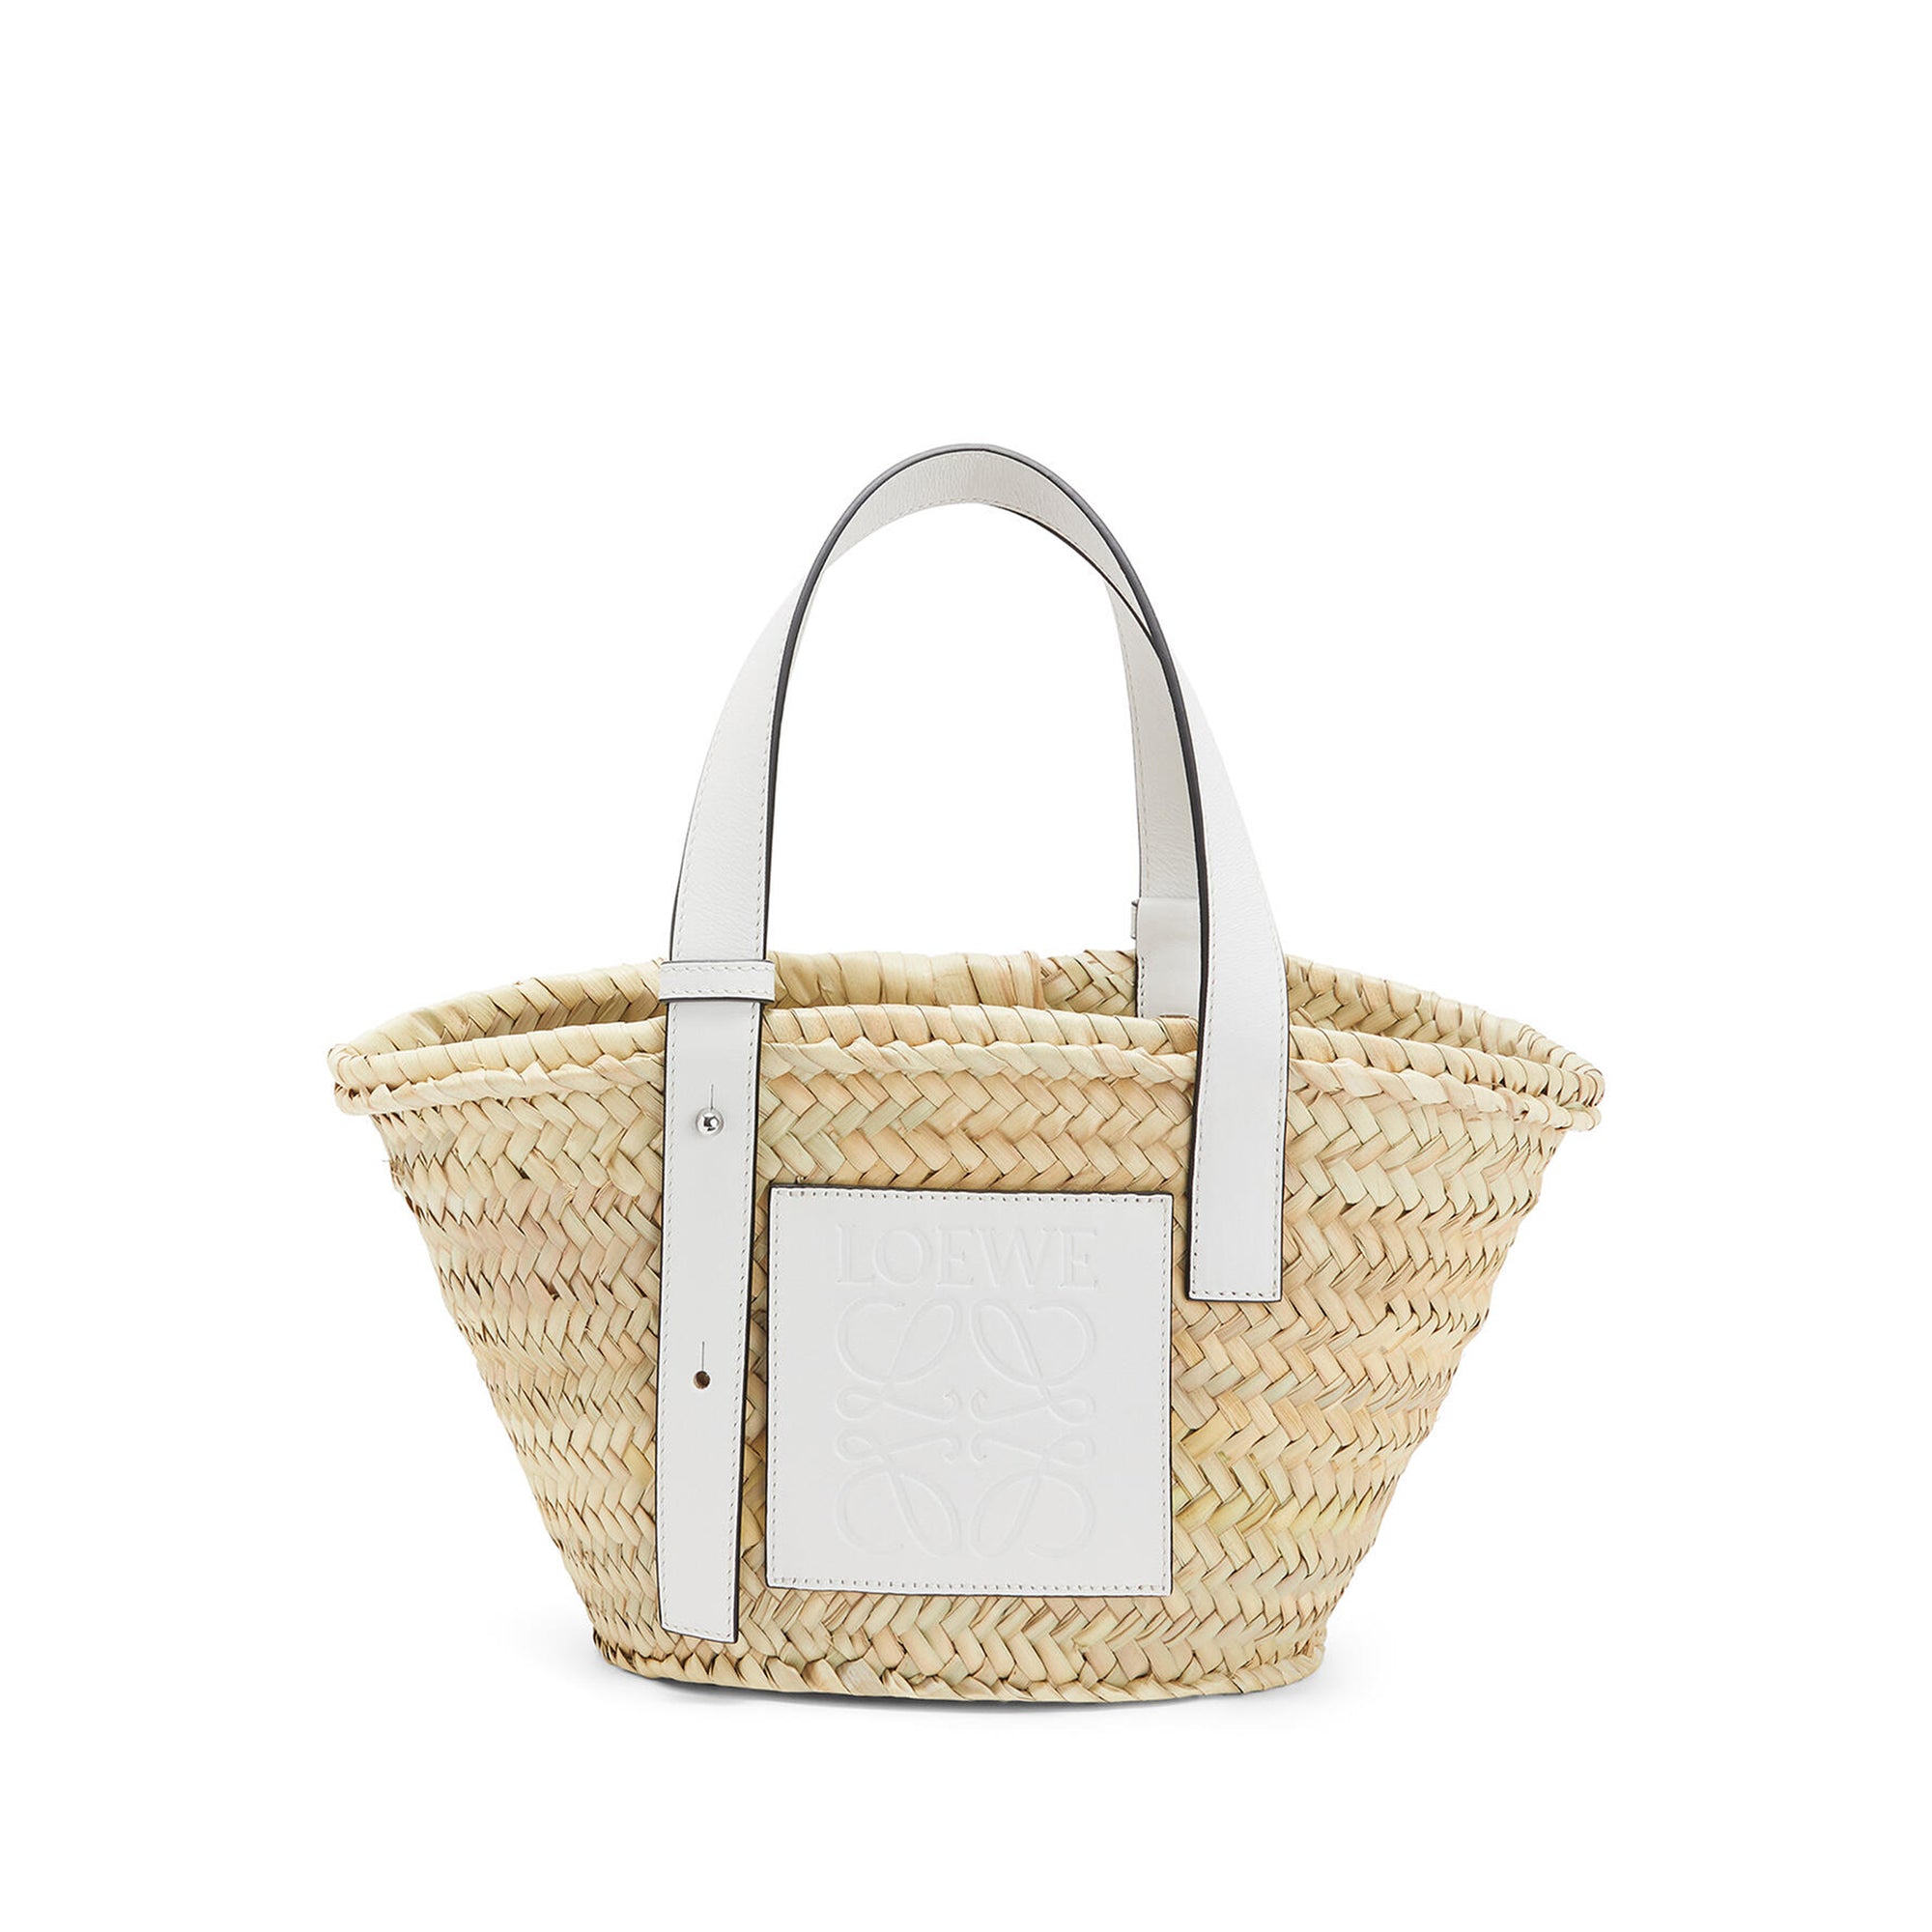 Loewe - Women’s Basket Small Bag - (Natural/White) view 2